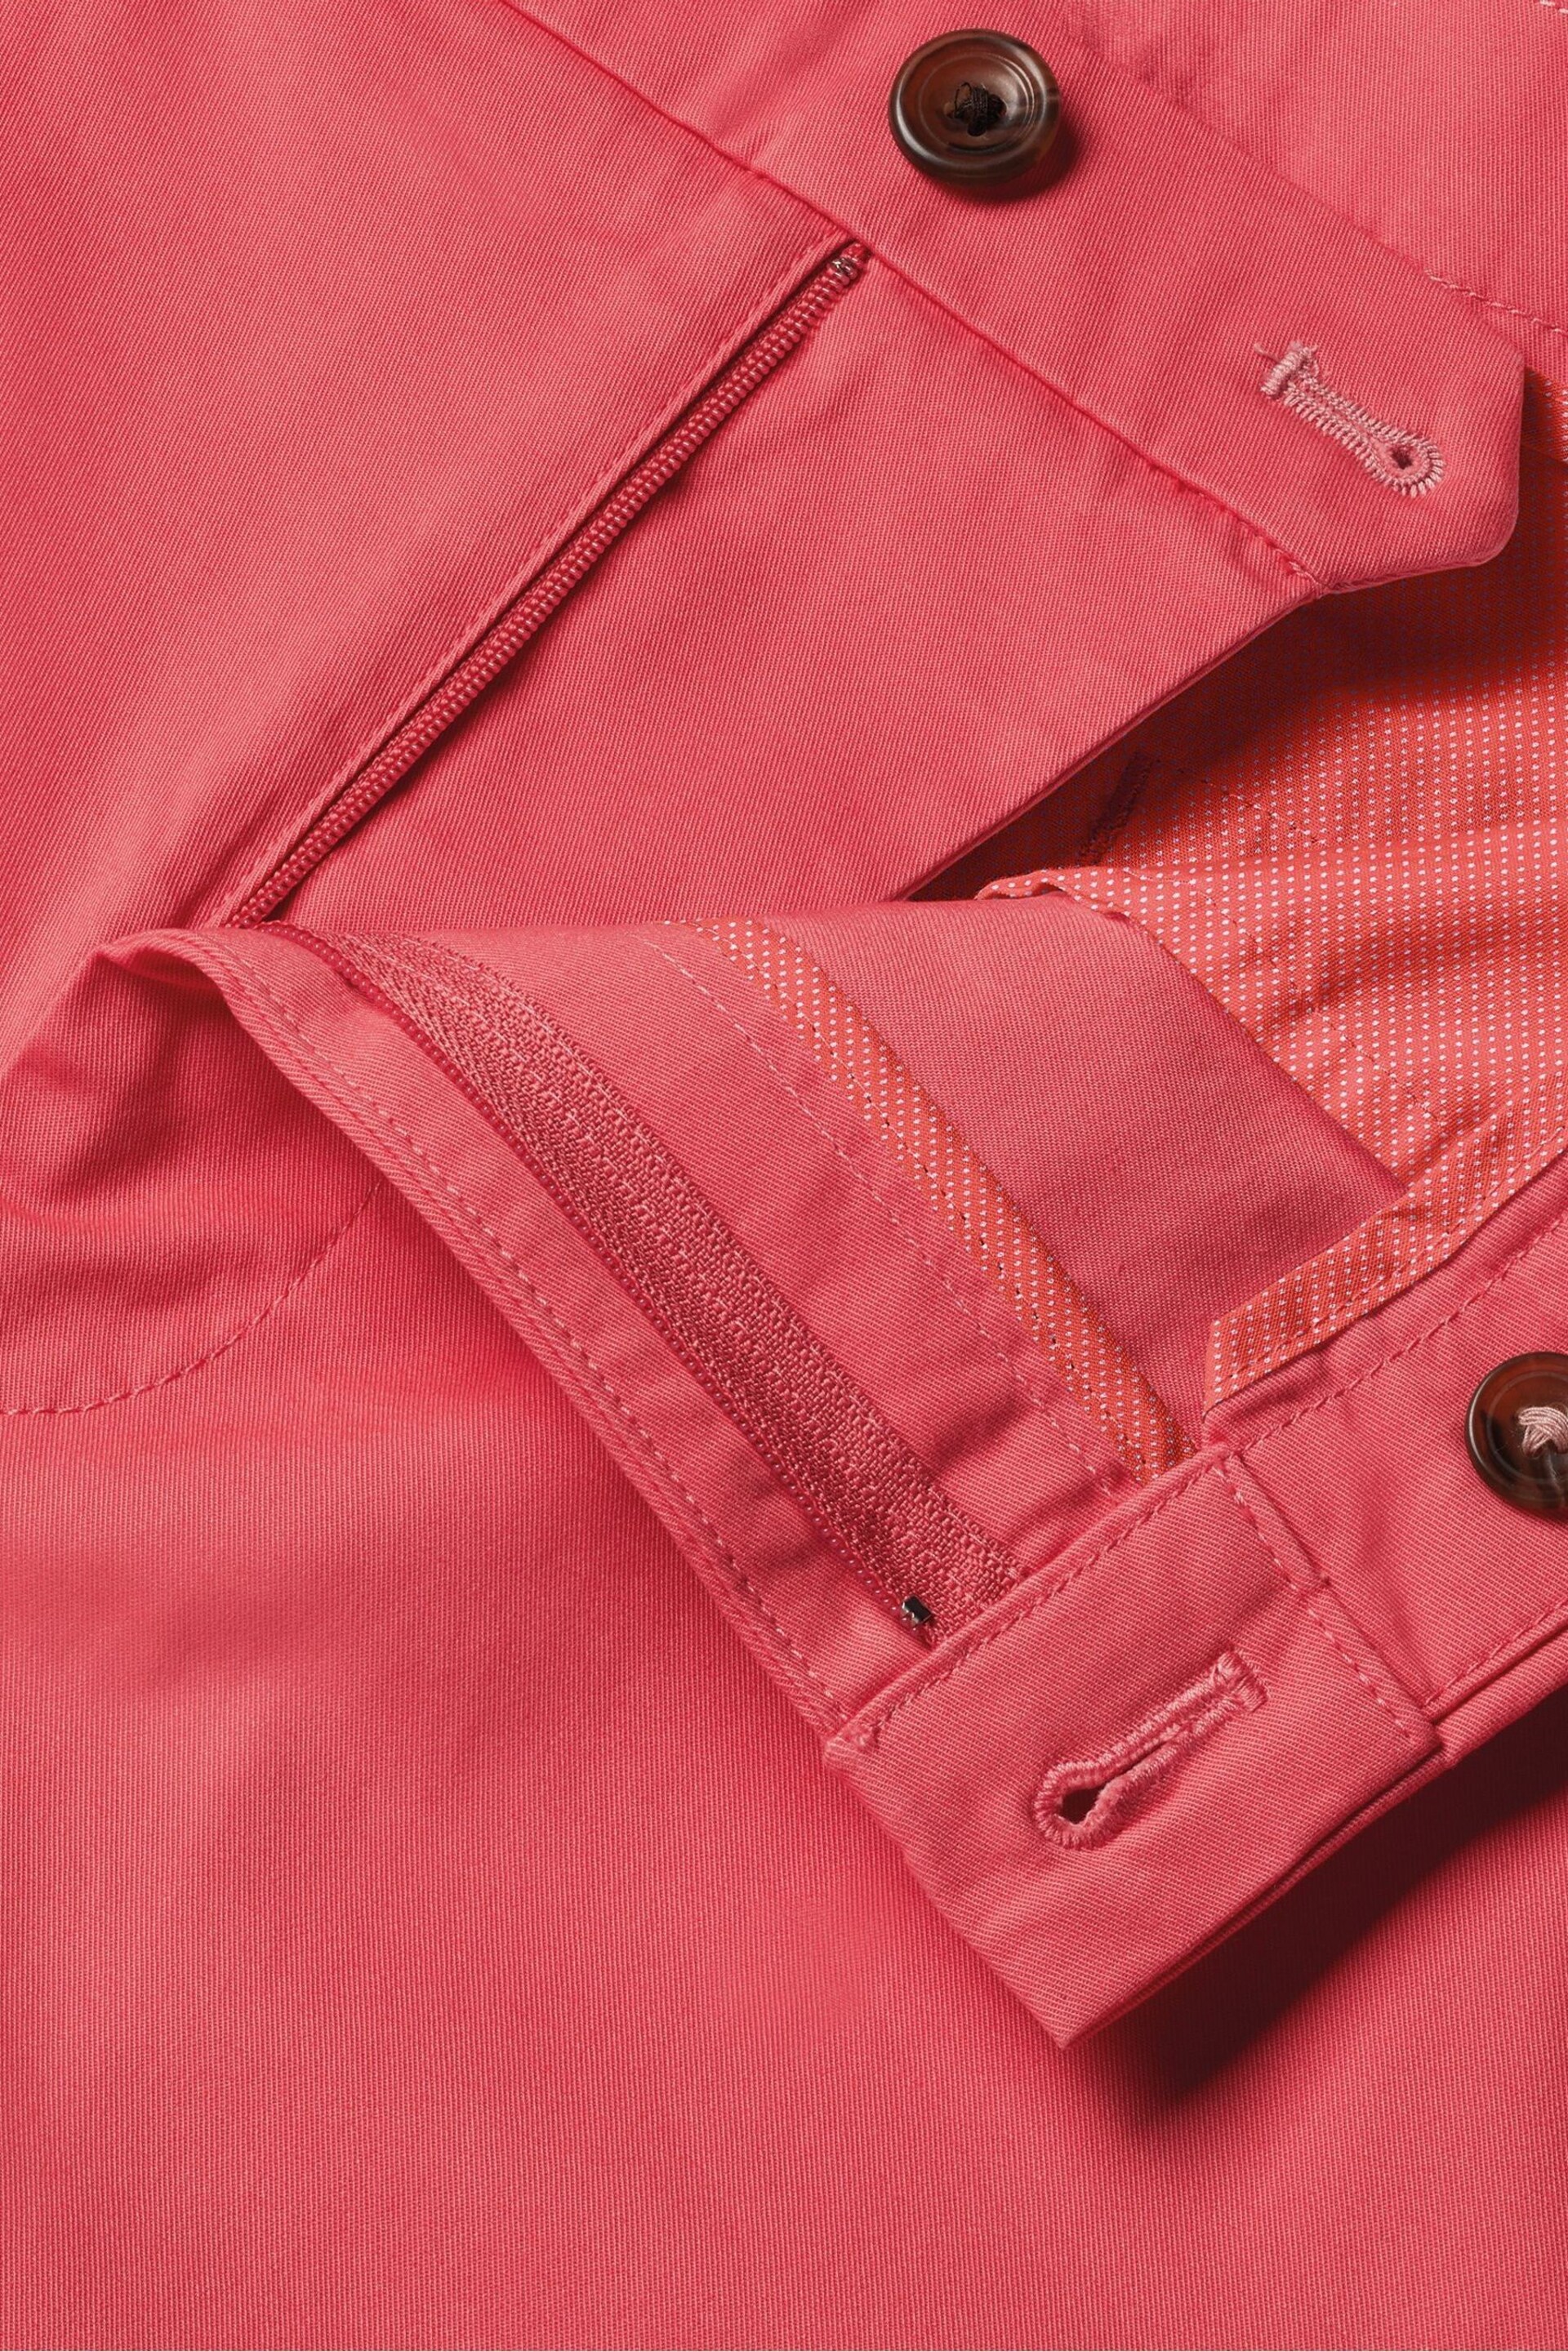 Charles Tyrwhitt Pink Cotton Shorts - Image 6 of 6